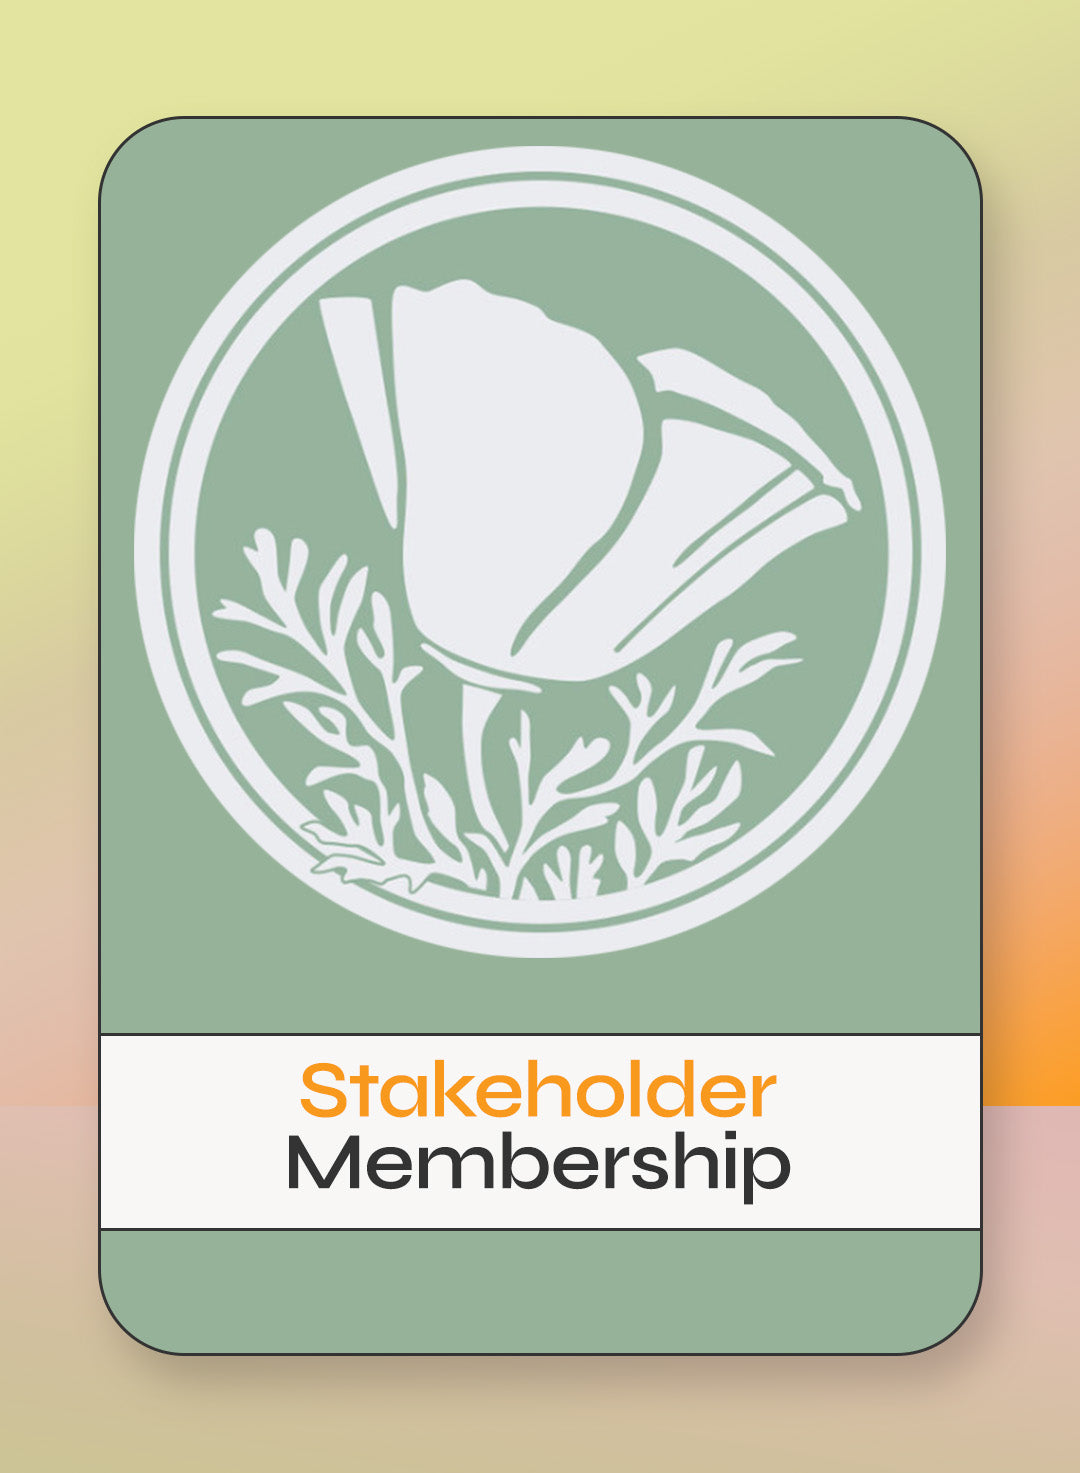 Annual Membership - Stakeholder